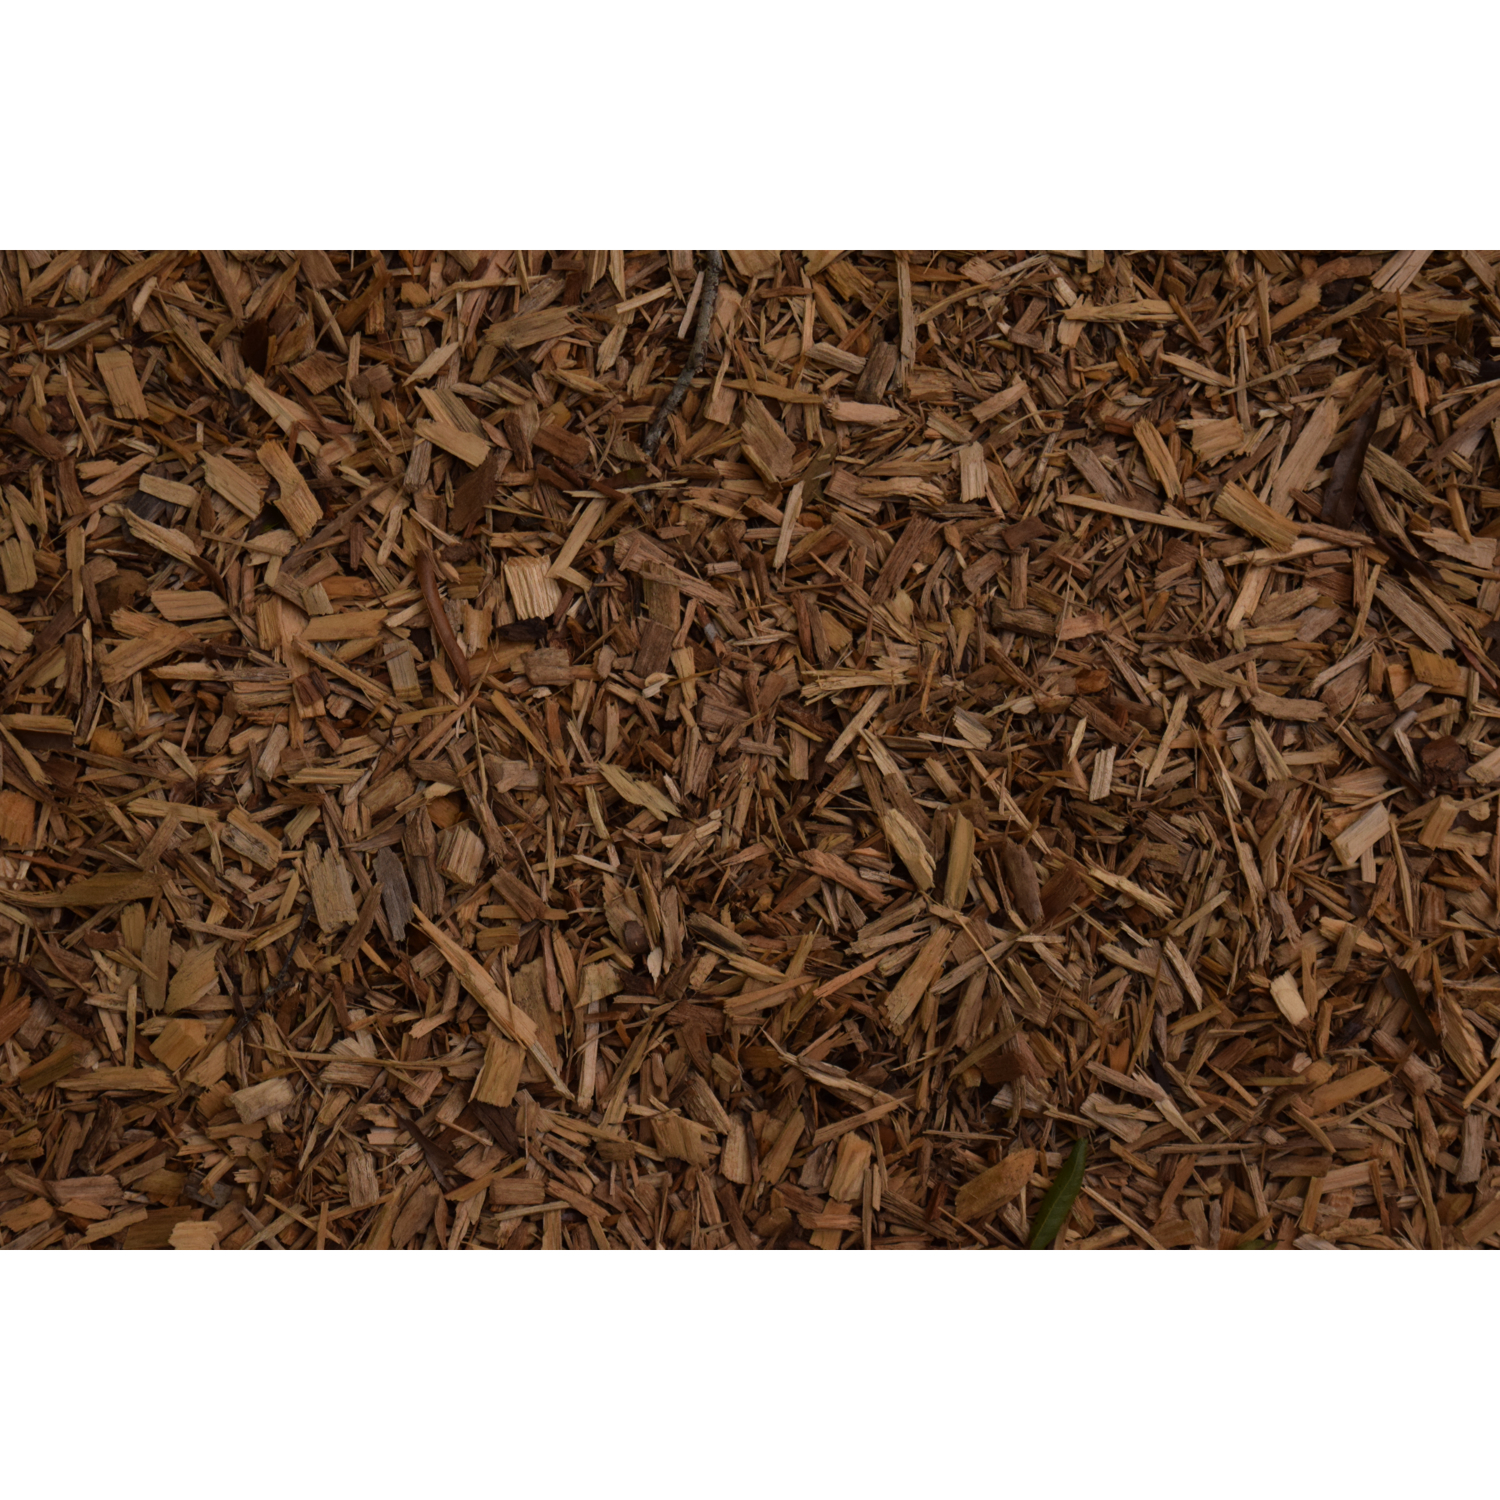 Image of Ace shredded bark mulch